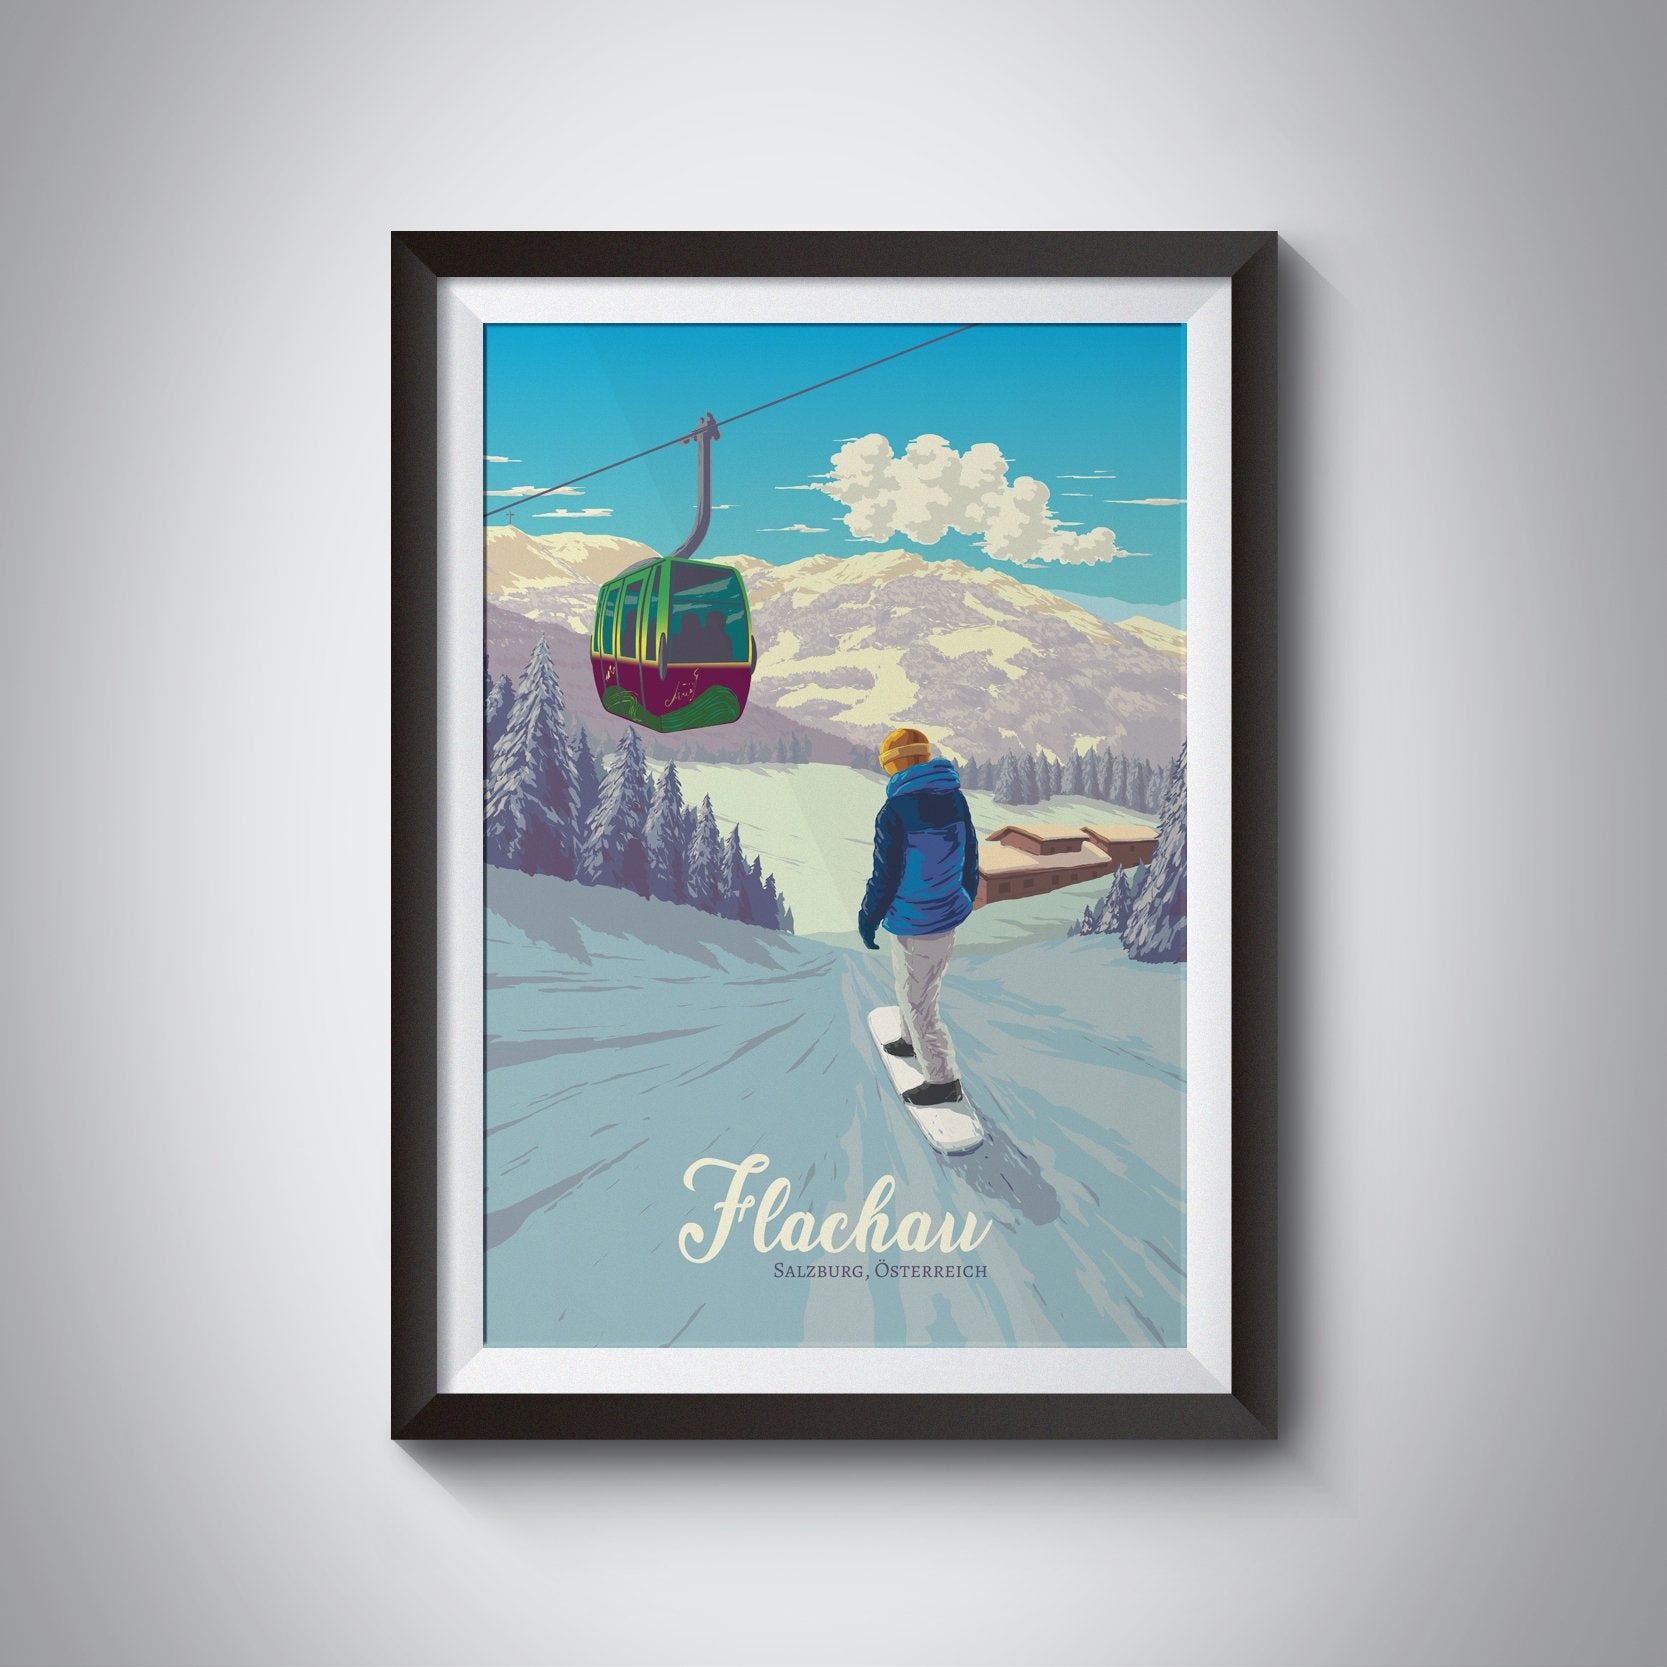 Flachau Snowboarding Travel Poster